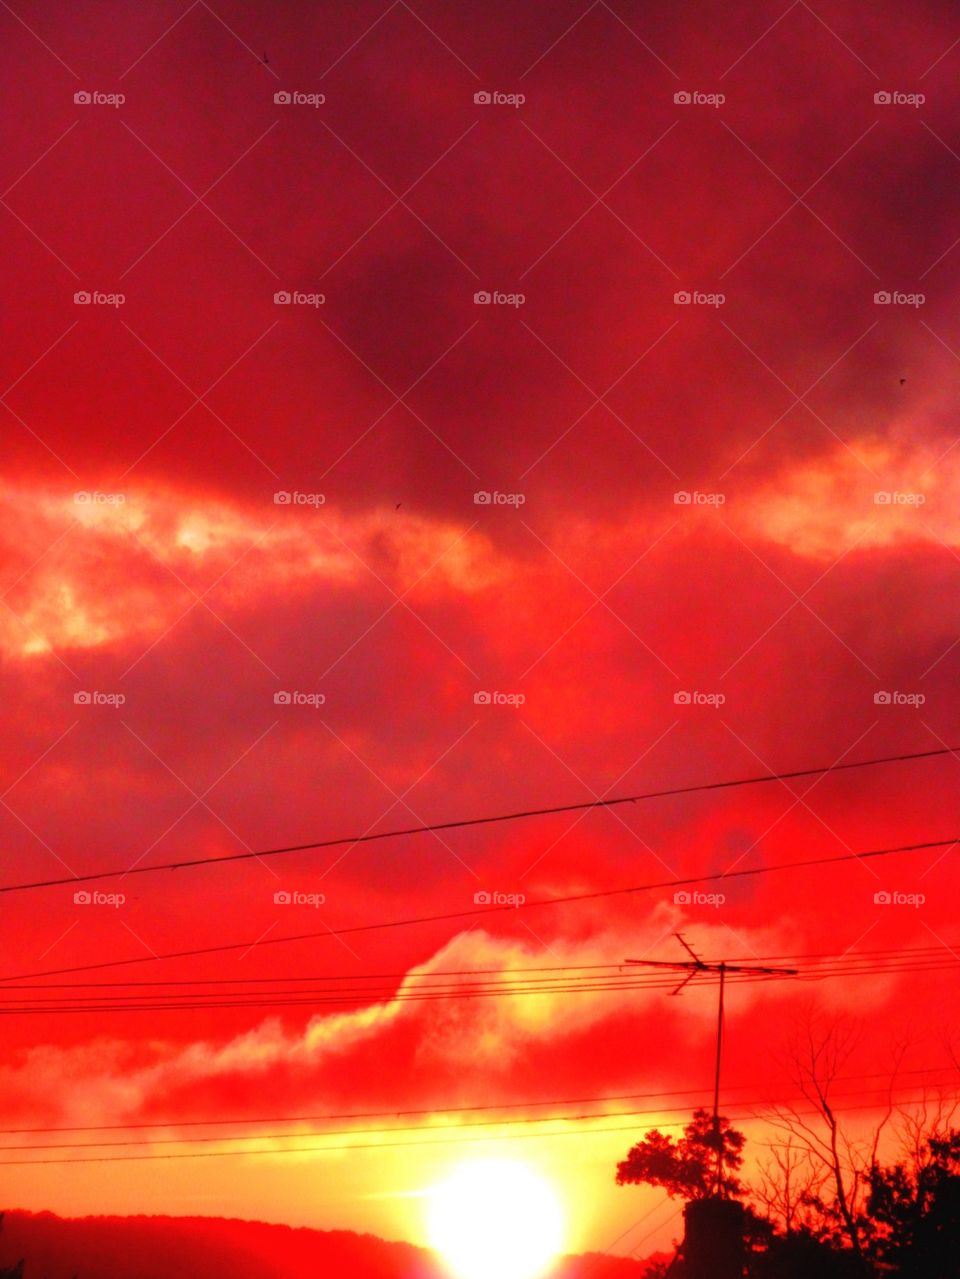 Blood-red sunset over Farrell Pennsylvania 